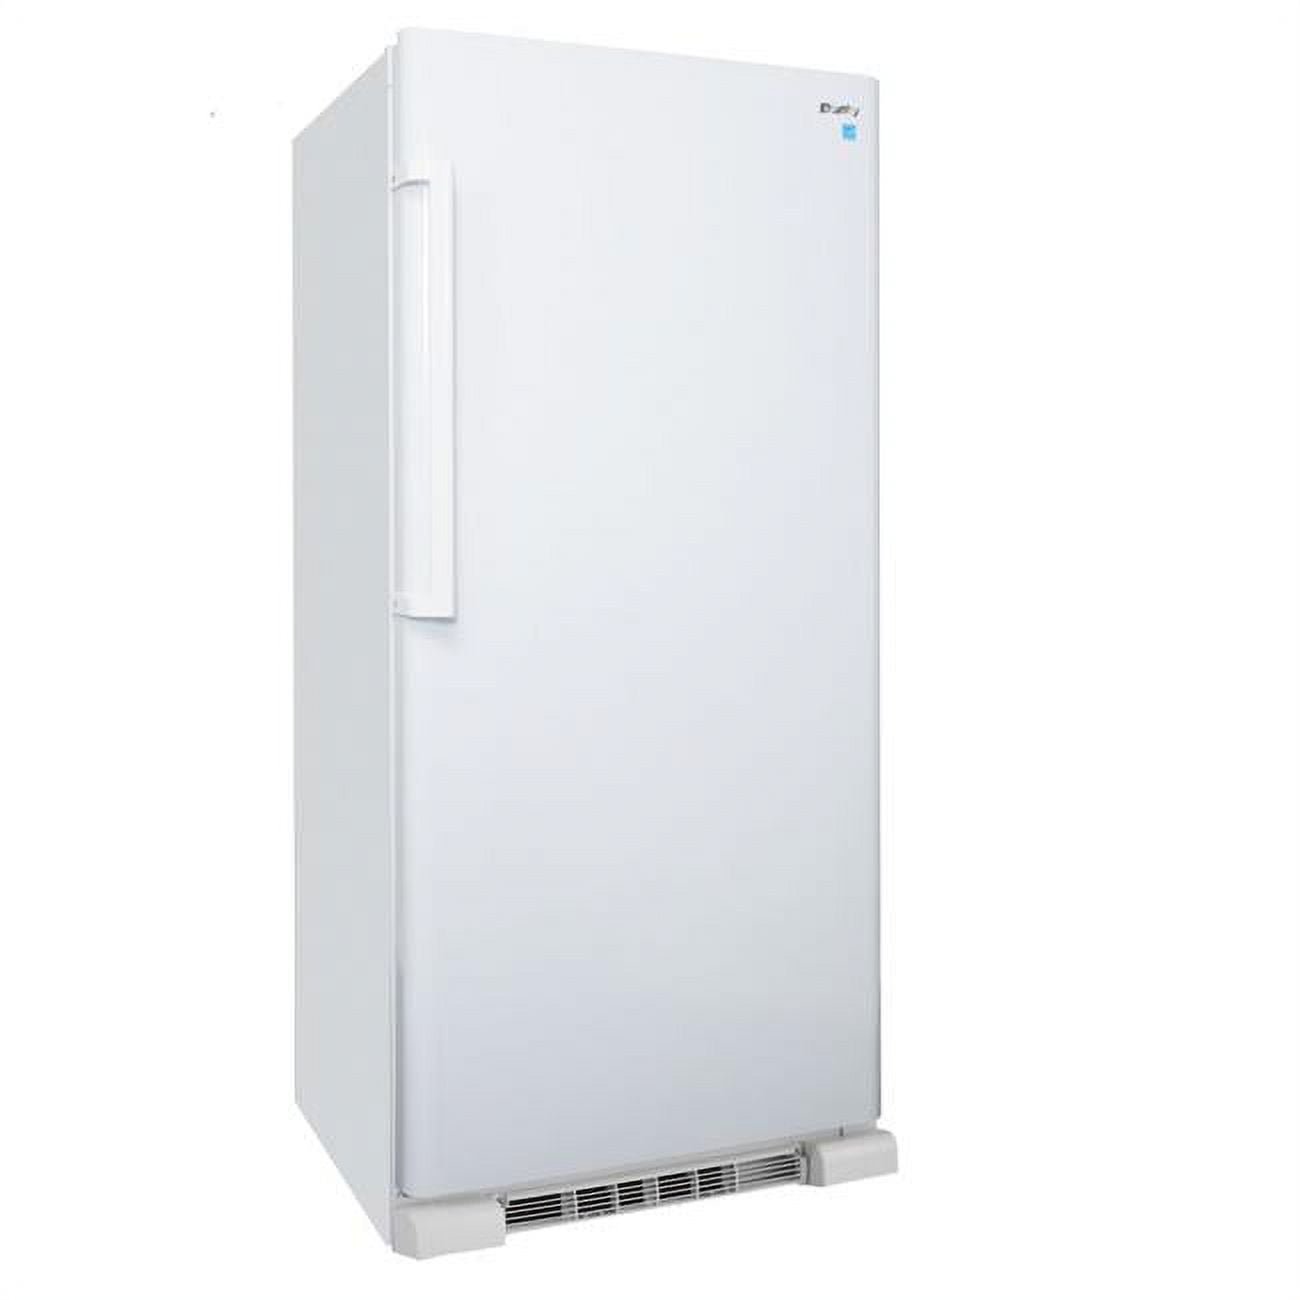 Danby 17 cuft Apartment Size Refrigerator, Two See-Thru Crispers, ESTAR - White